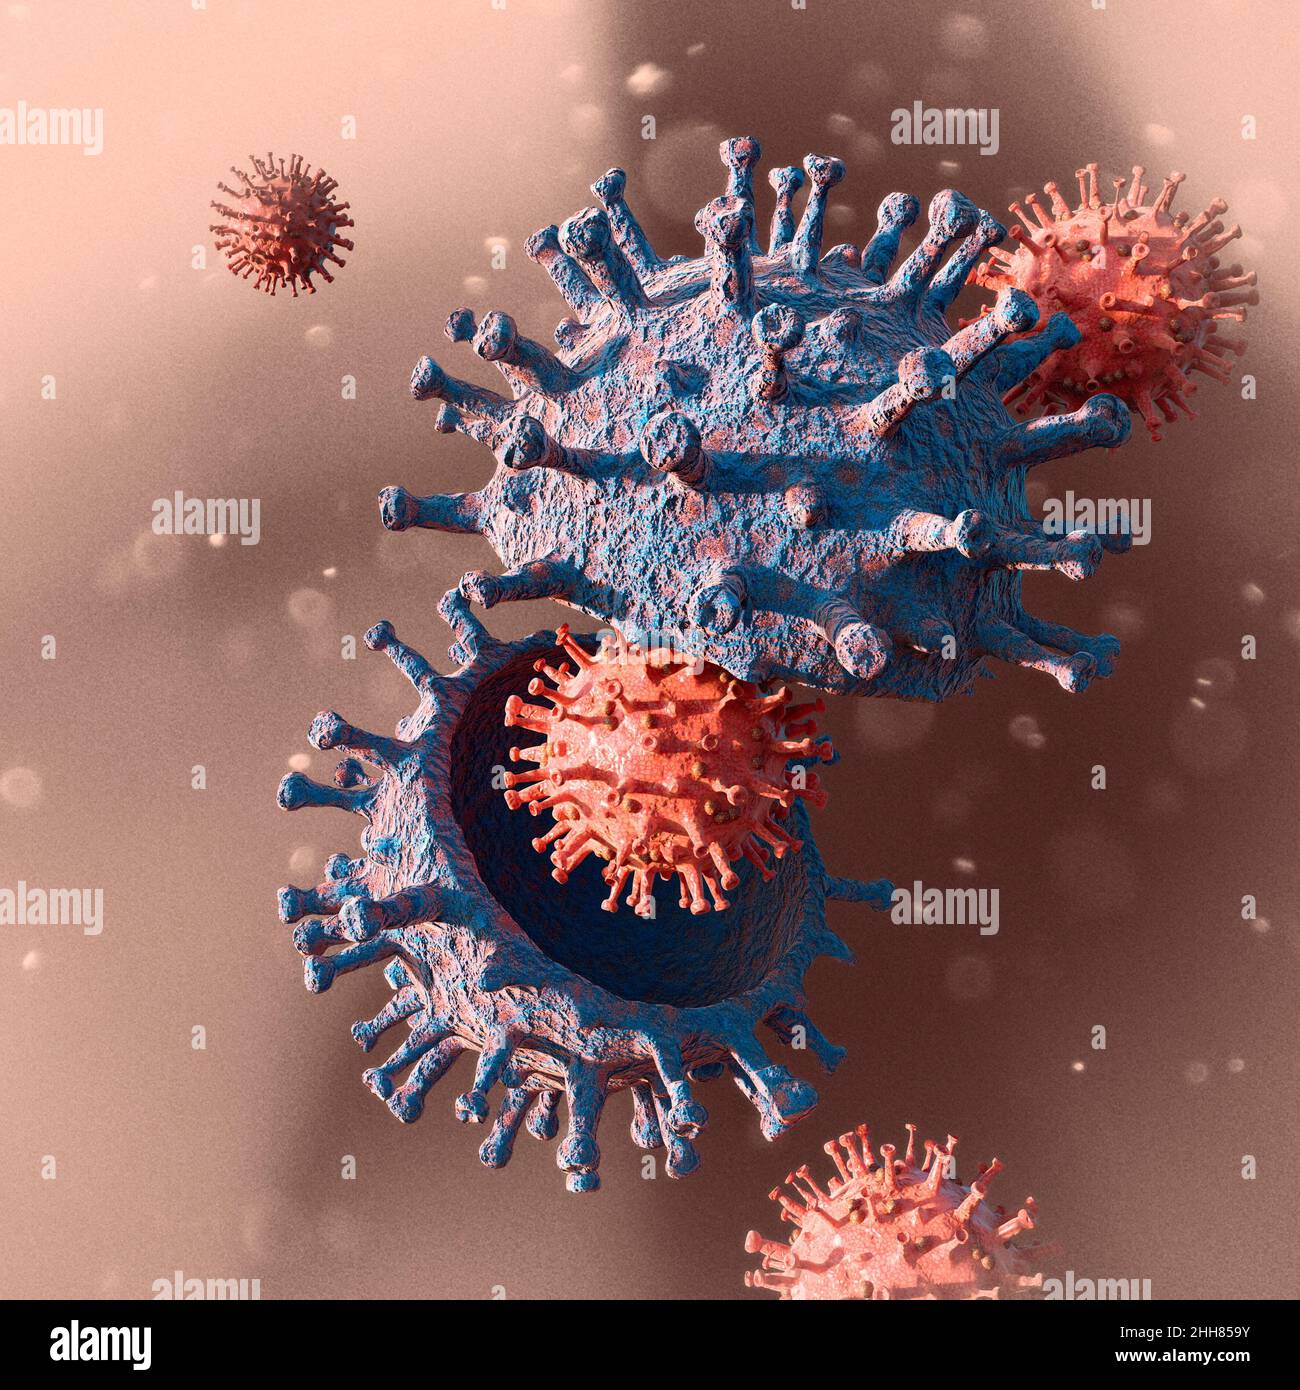 Covid-19 unter dem Mikroskop gesehen. Virusvariante, Coronavirus, Spike- Protein. SARS-CoV-2, 3D-Rendering Stockfotografie - Alamy